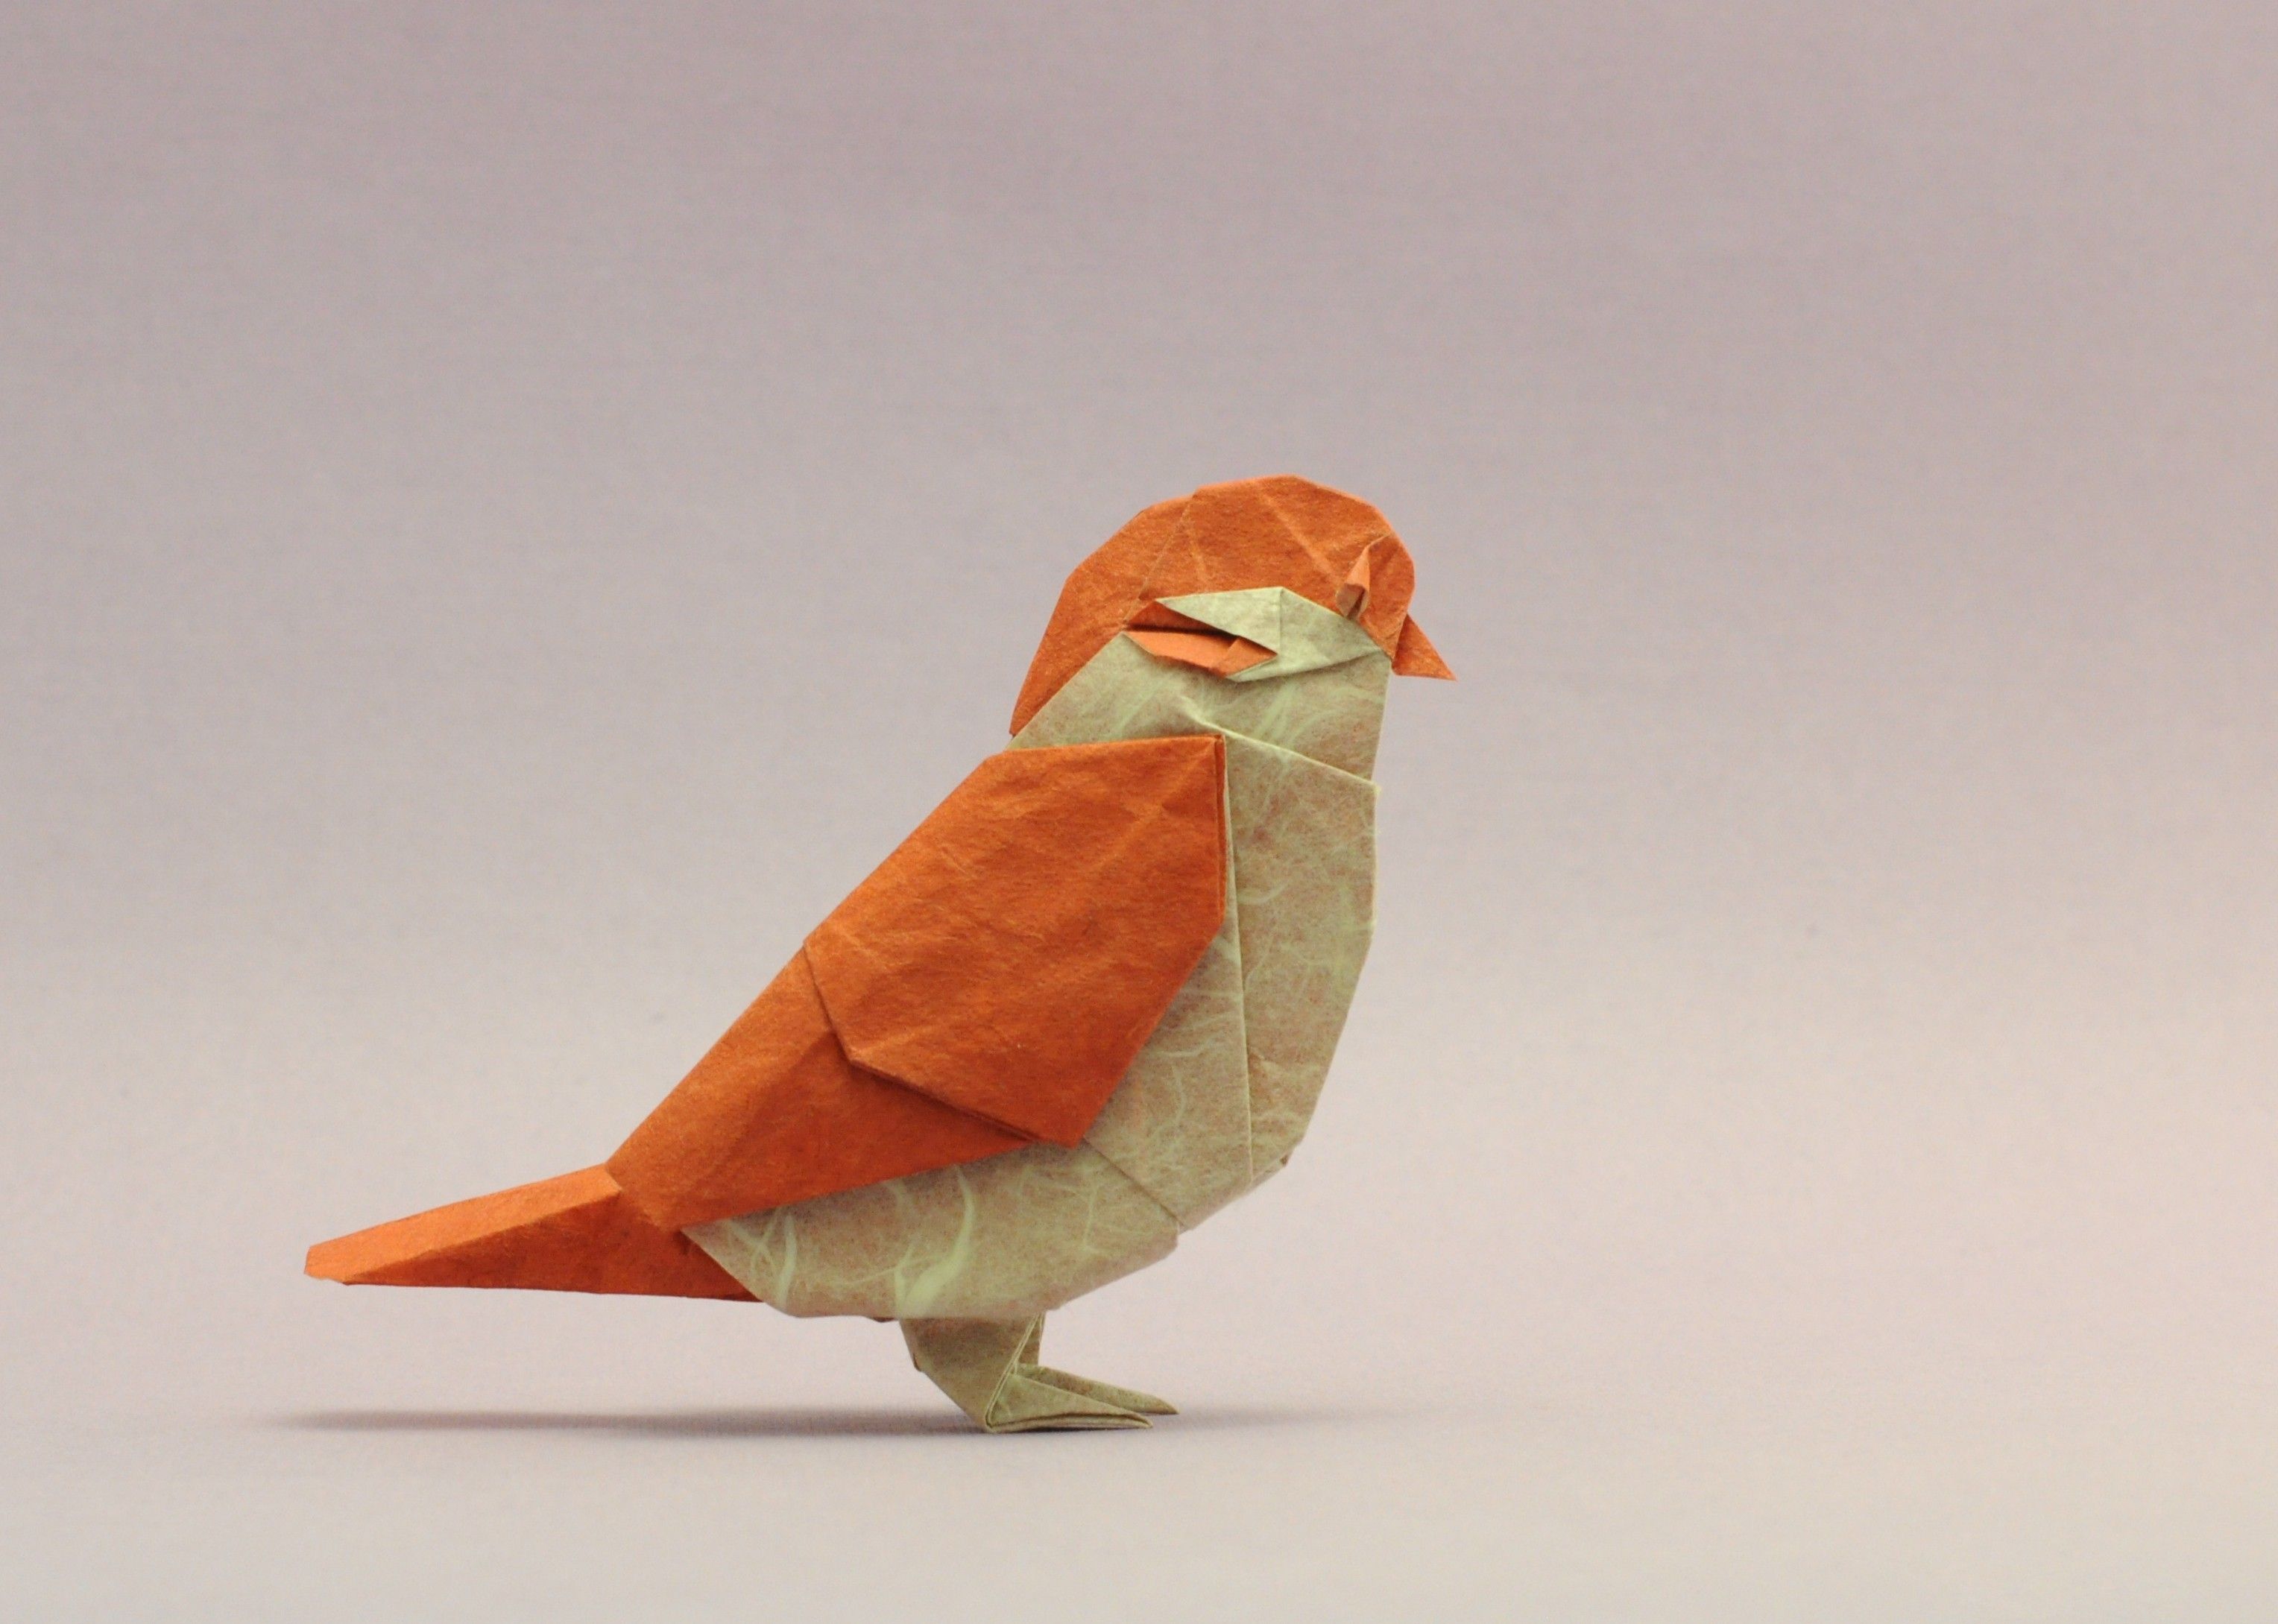 Bird Origami, HD Creative, 4k Wallpaper, Image, Background